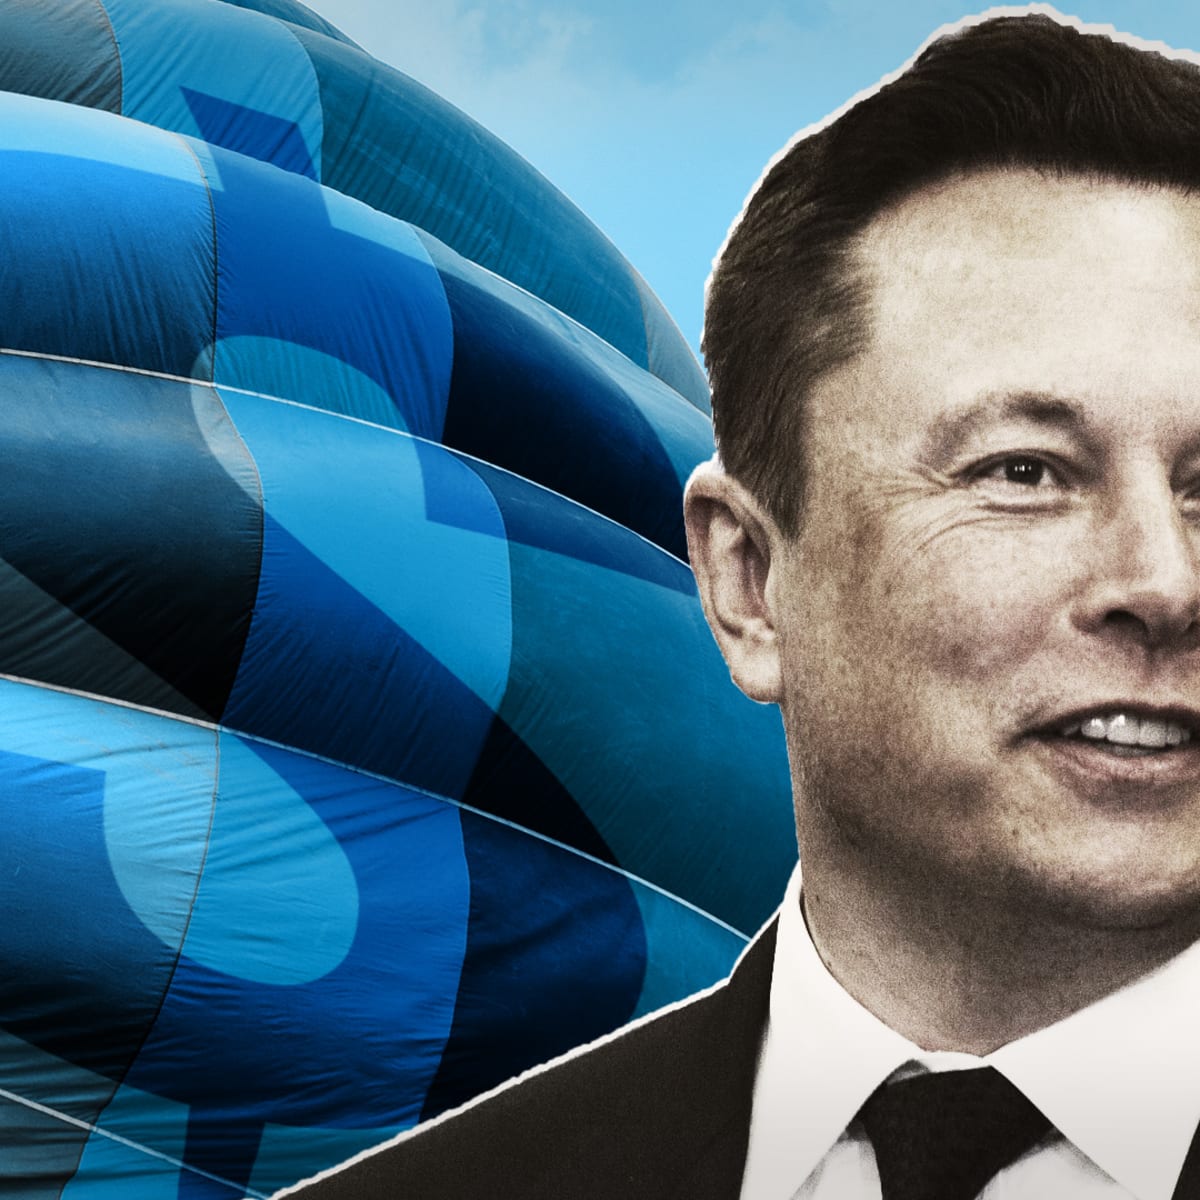 Elon Musk confirms he already uploaded his brain to a cloud, he